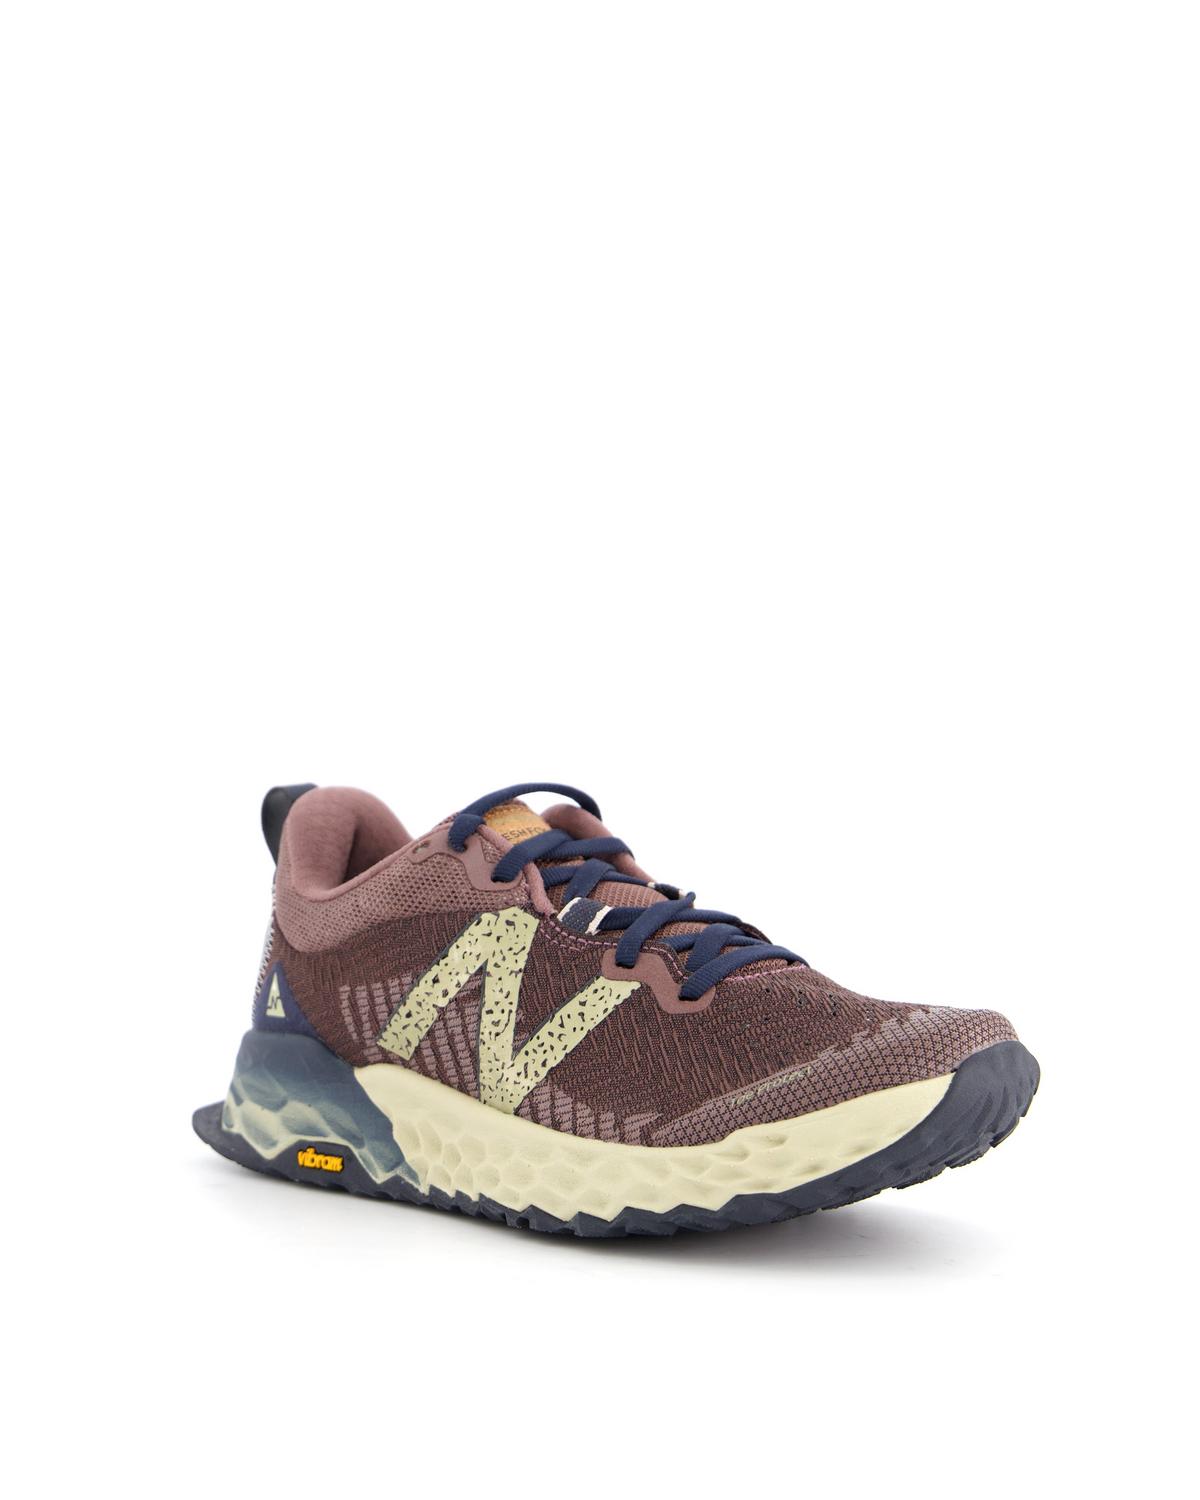 New Balance Women’s Hierro V6 Trail Running Shoes -  Brown